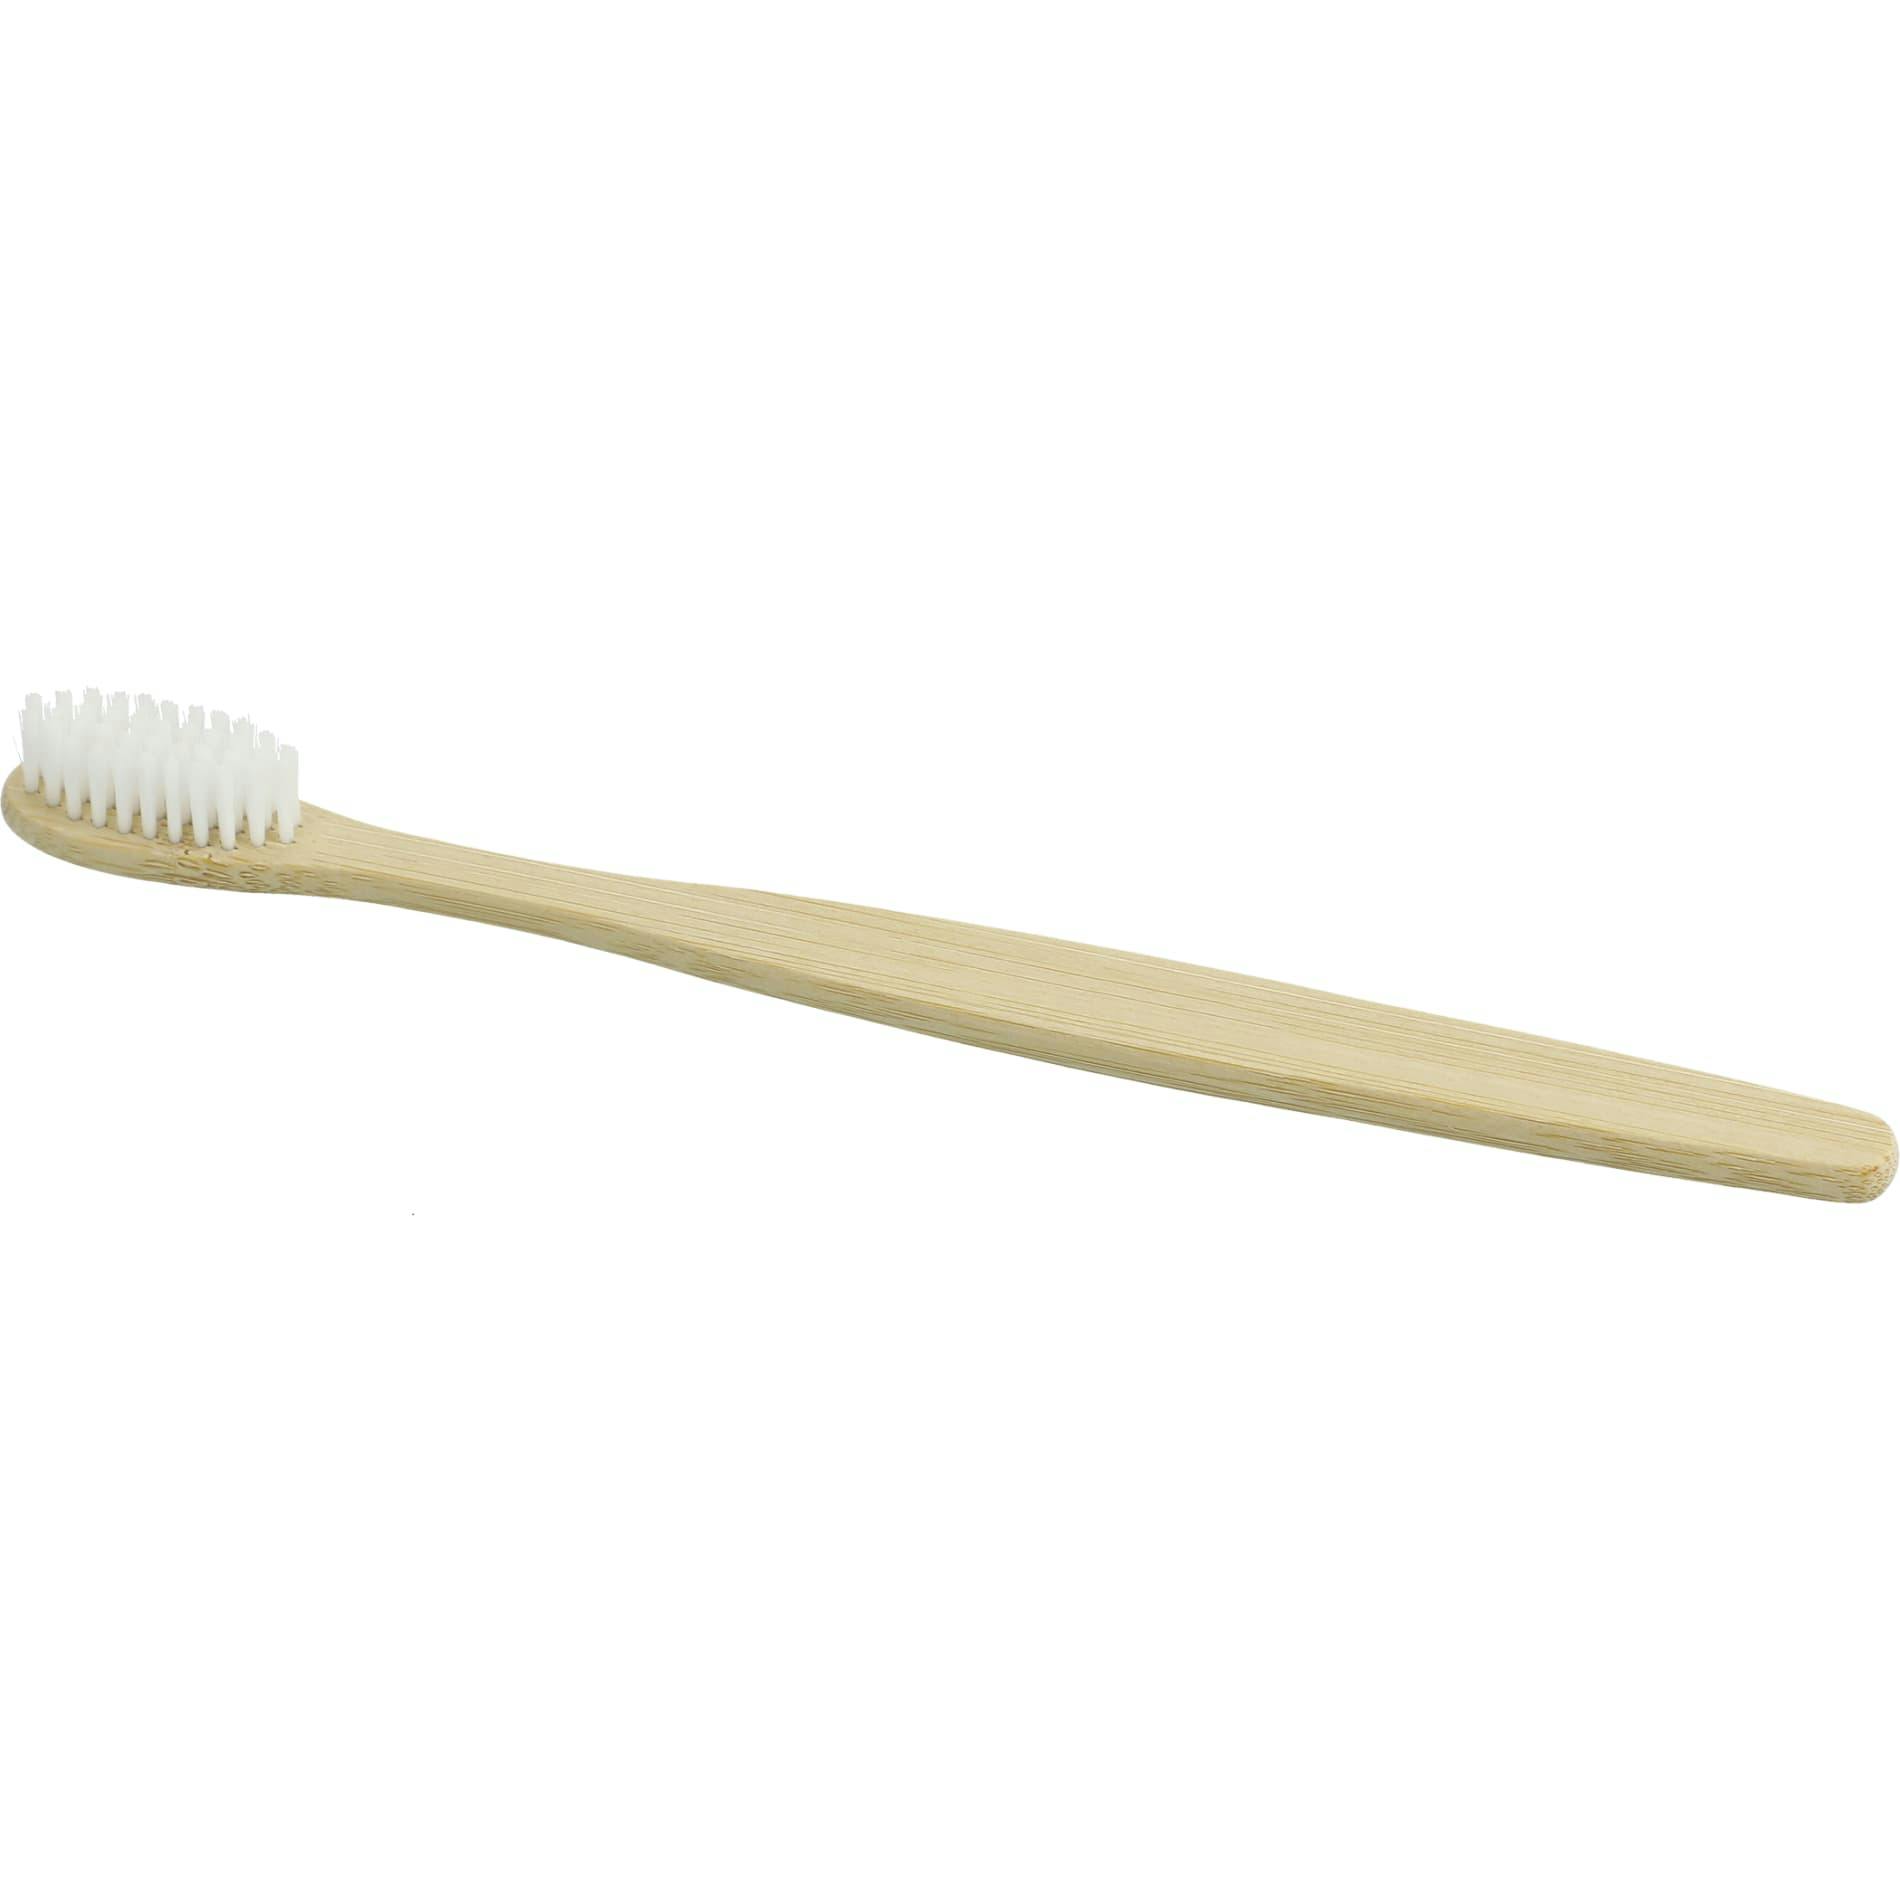 Bamboo Toothbrush - additional Image 2